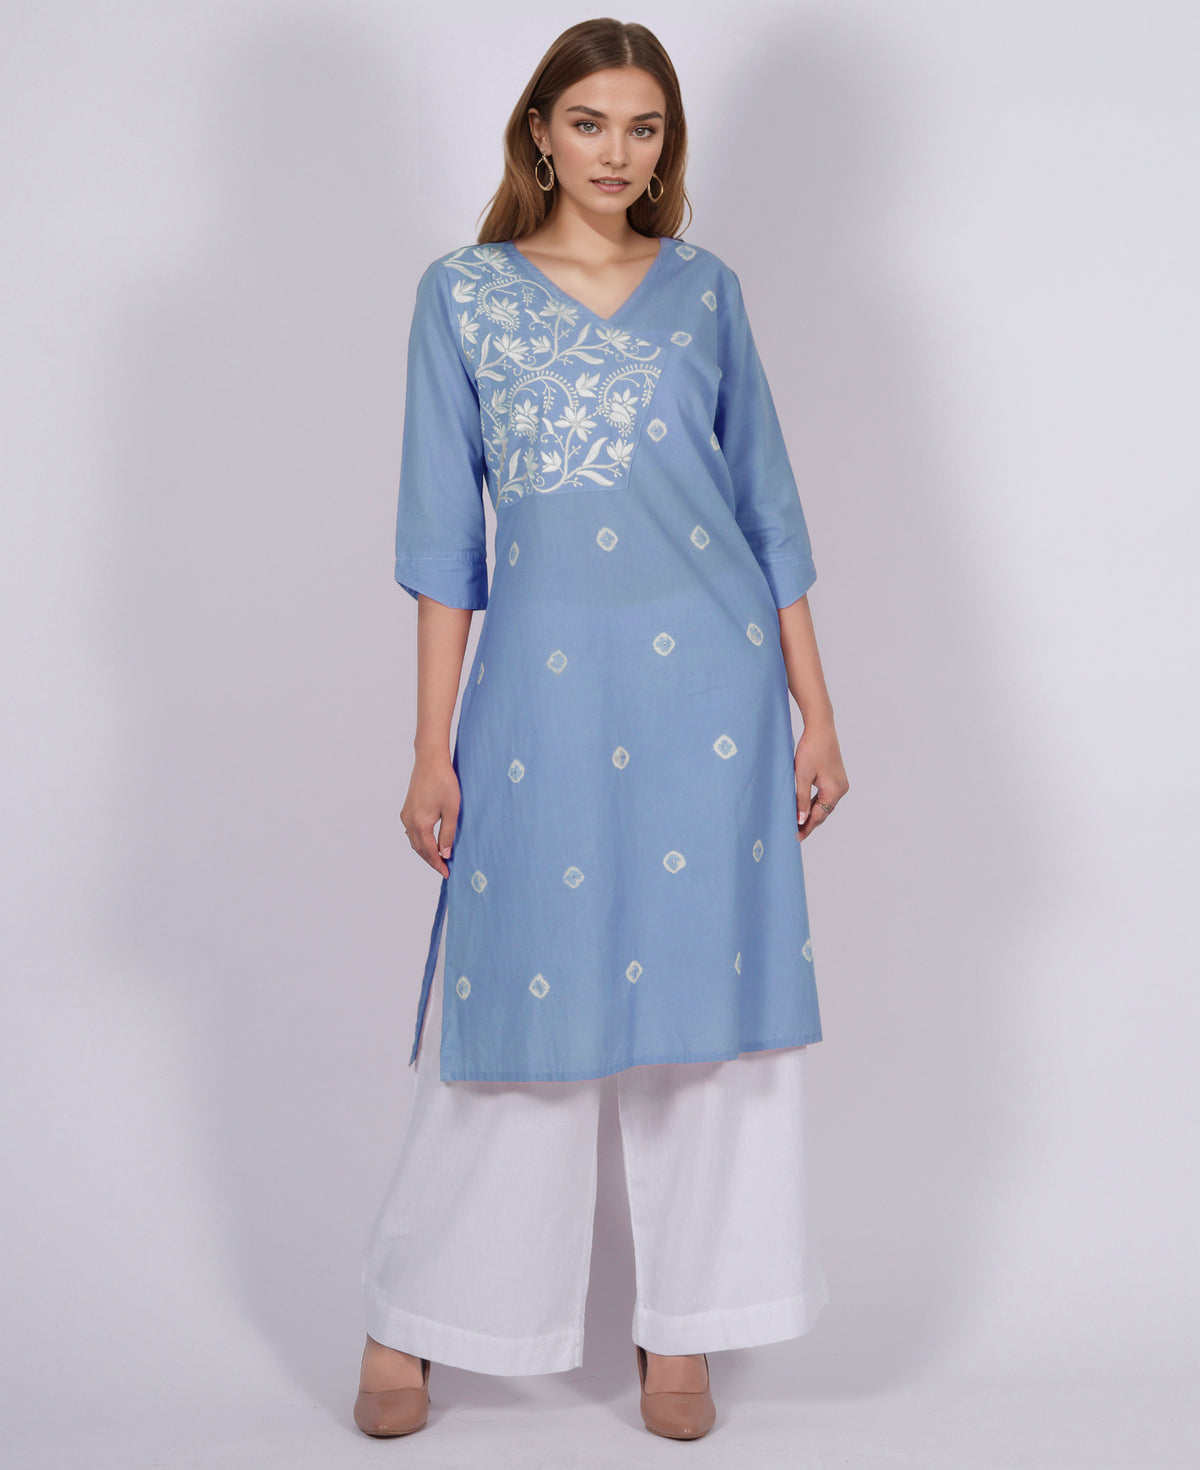 GODAVARI Pure Cotton Hand Embroidered Tie Dye Tunic Dress Kurta: Made to Order/Customizable